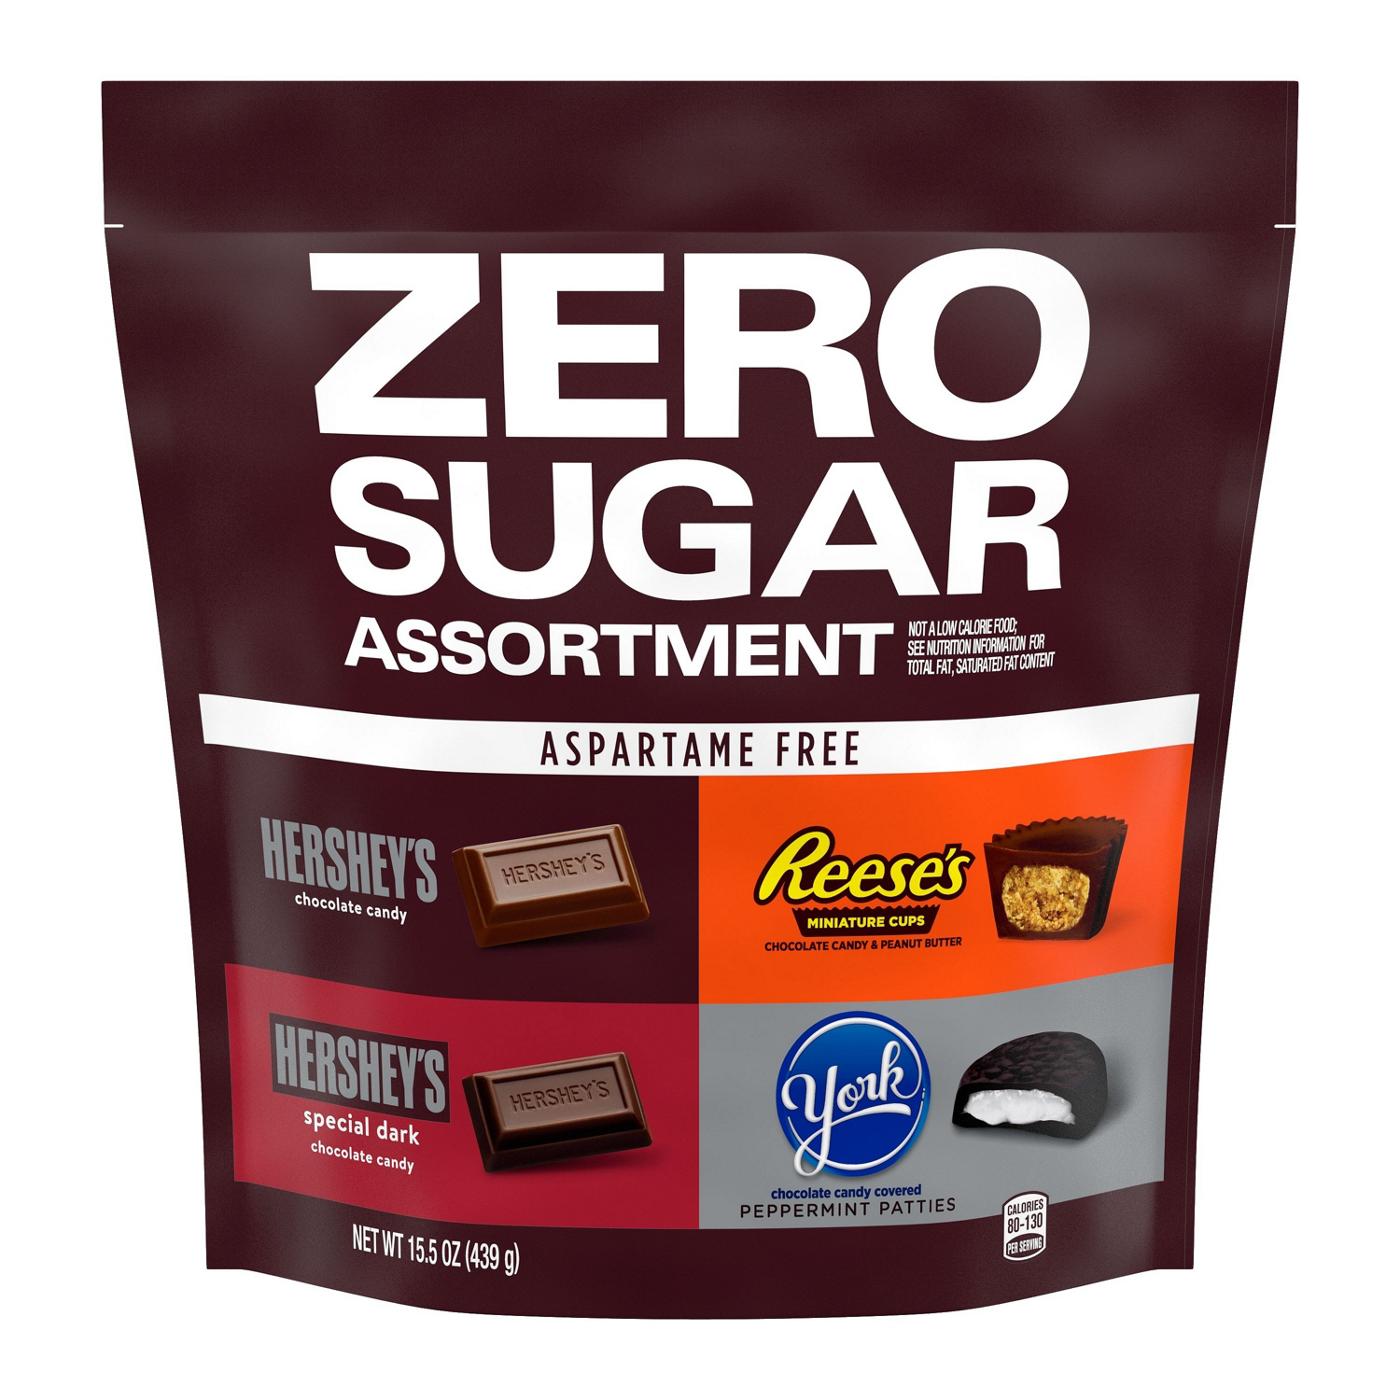 Hershey's, Reese's, & York Zero Sugar Assorted Chocolate Candy; image 1 of 4